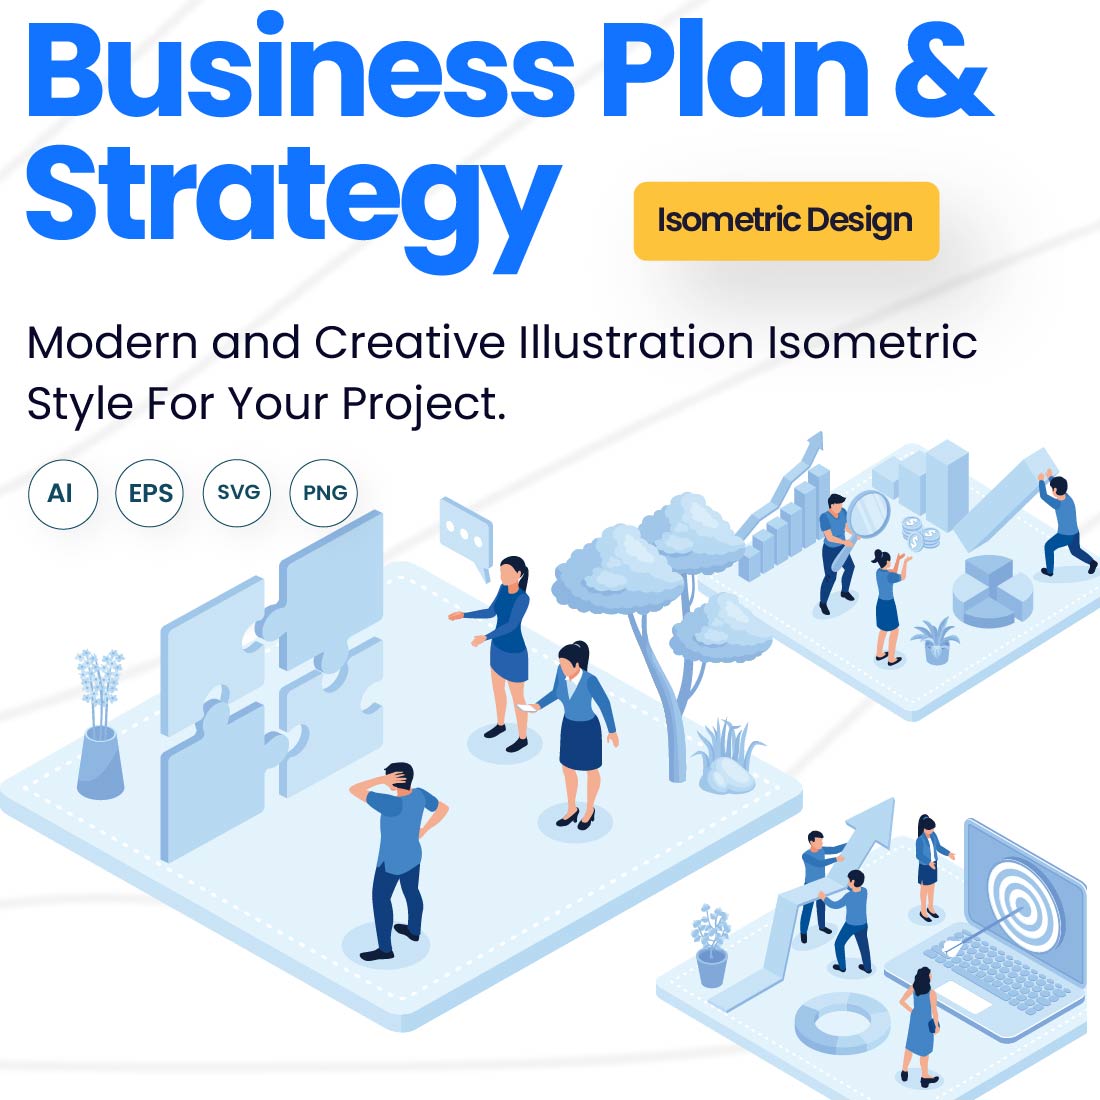 Business Plan & Strategy Illustration Design cover image.